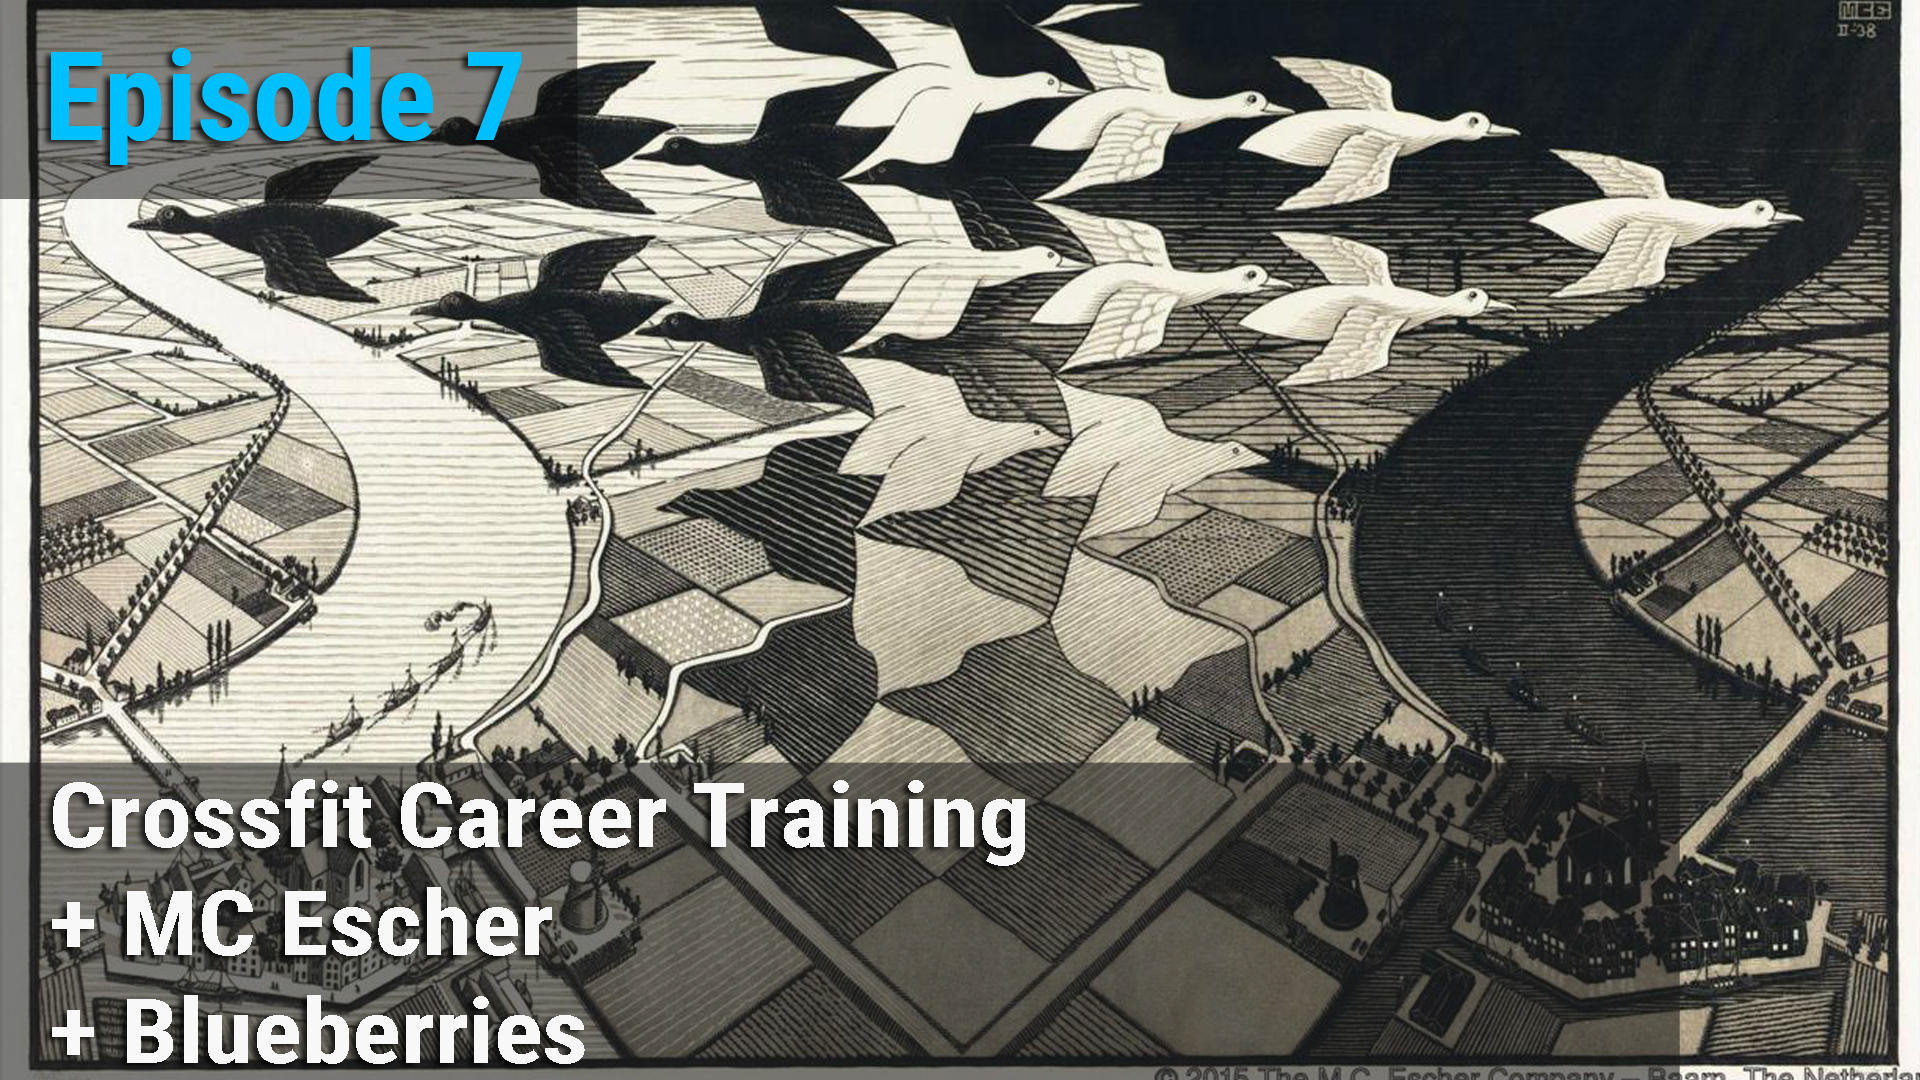 Crossfit Career Training + MC Escher + Blueberries